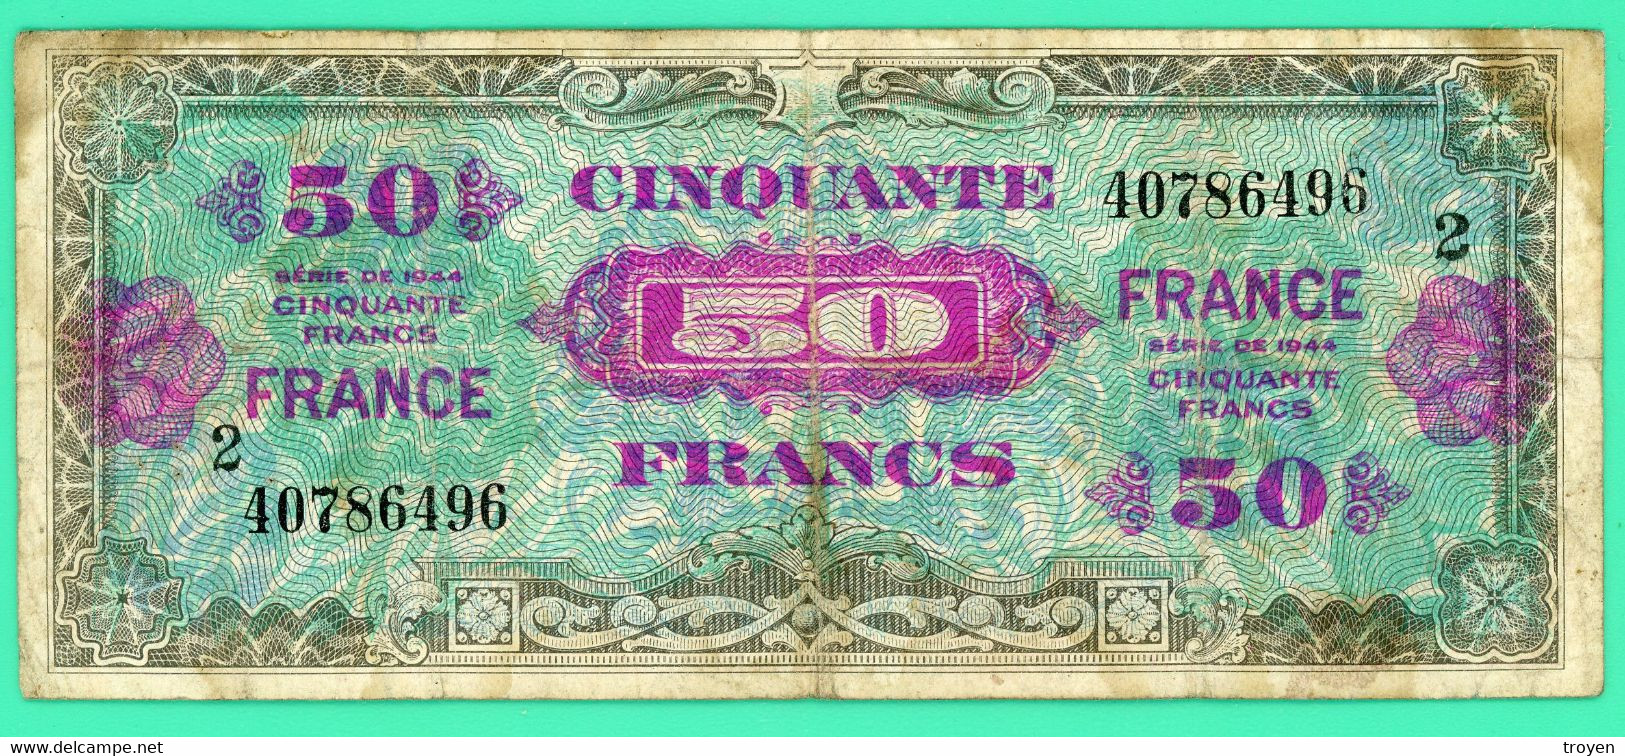 50 Francs Francel   - France - Série 2 - N° 40786196 - TB - 1944 Flag/France